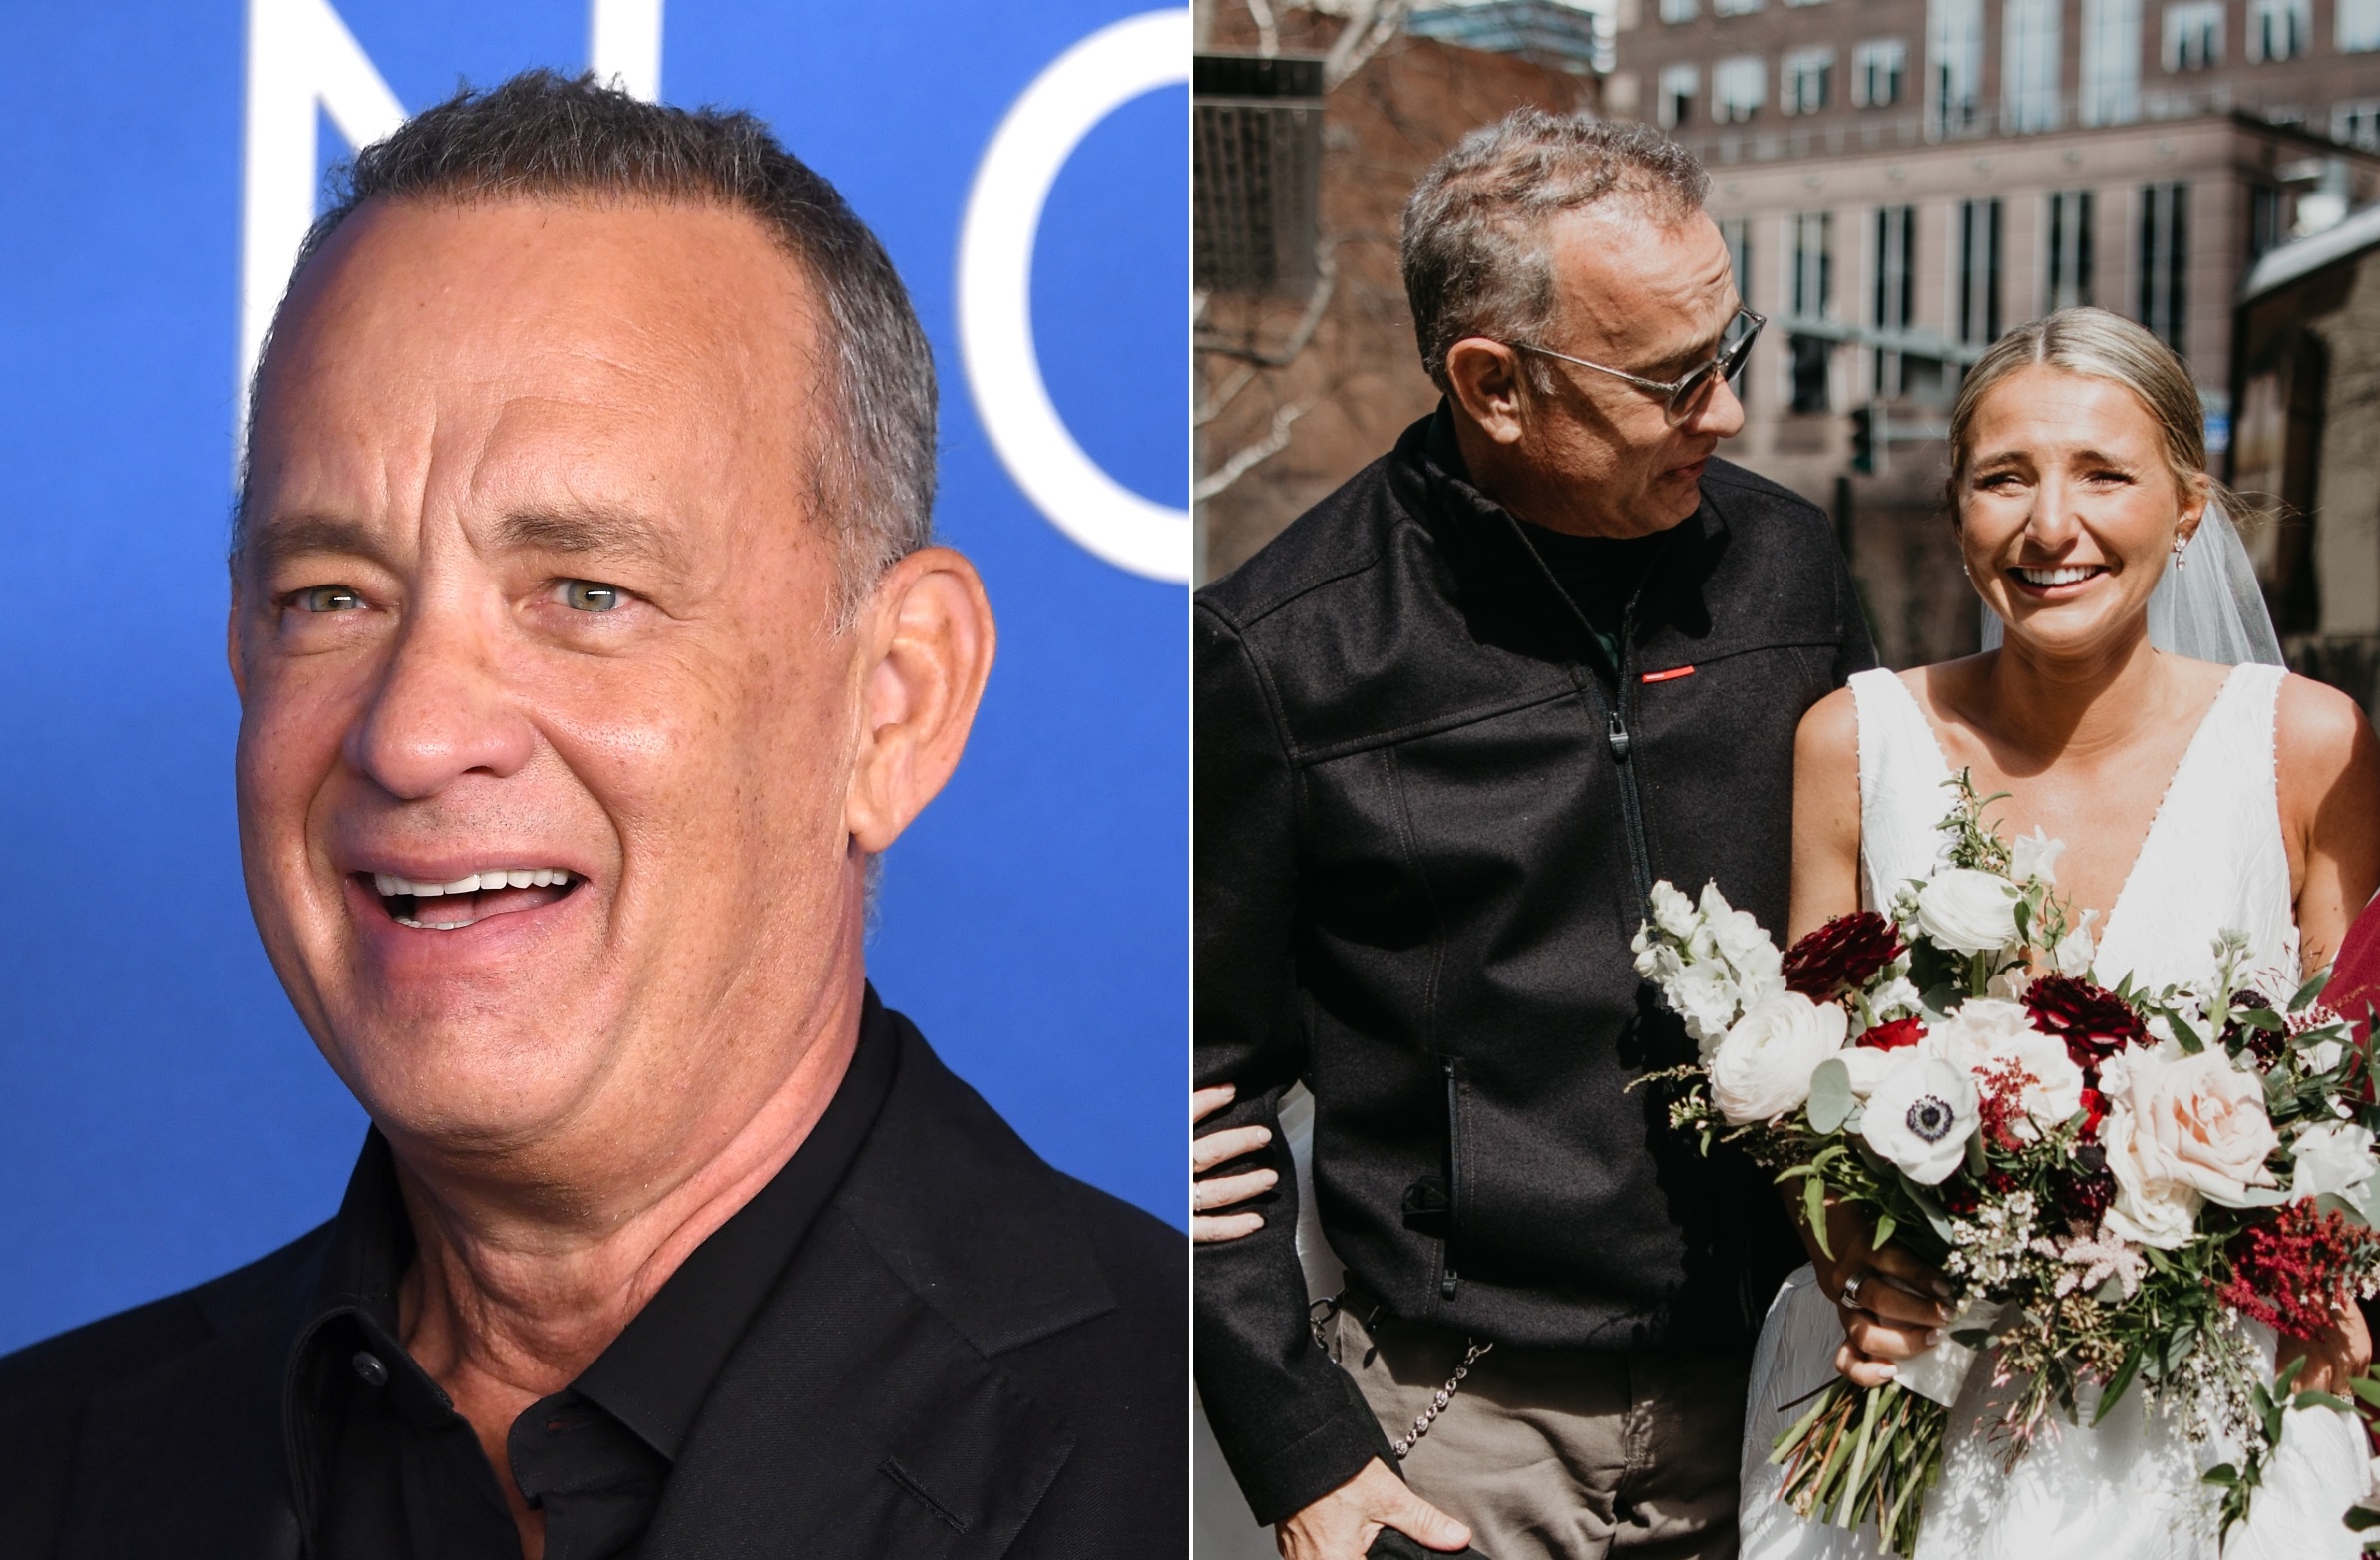 Tom Hanks Photobombs Bride On Her Wedding Day